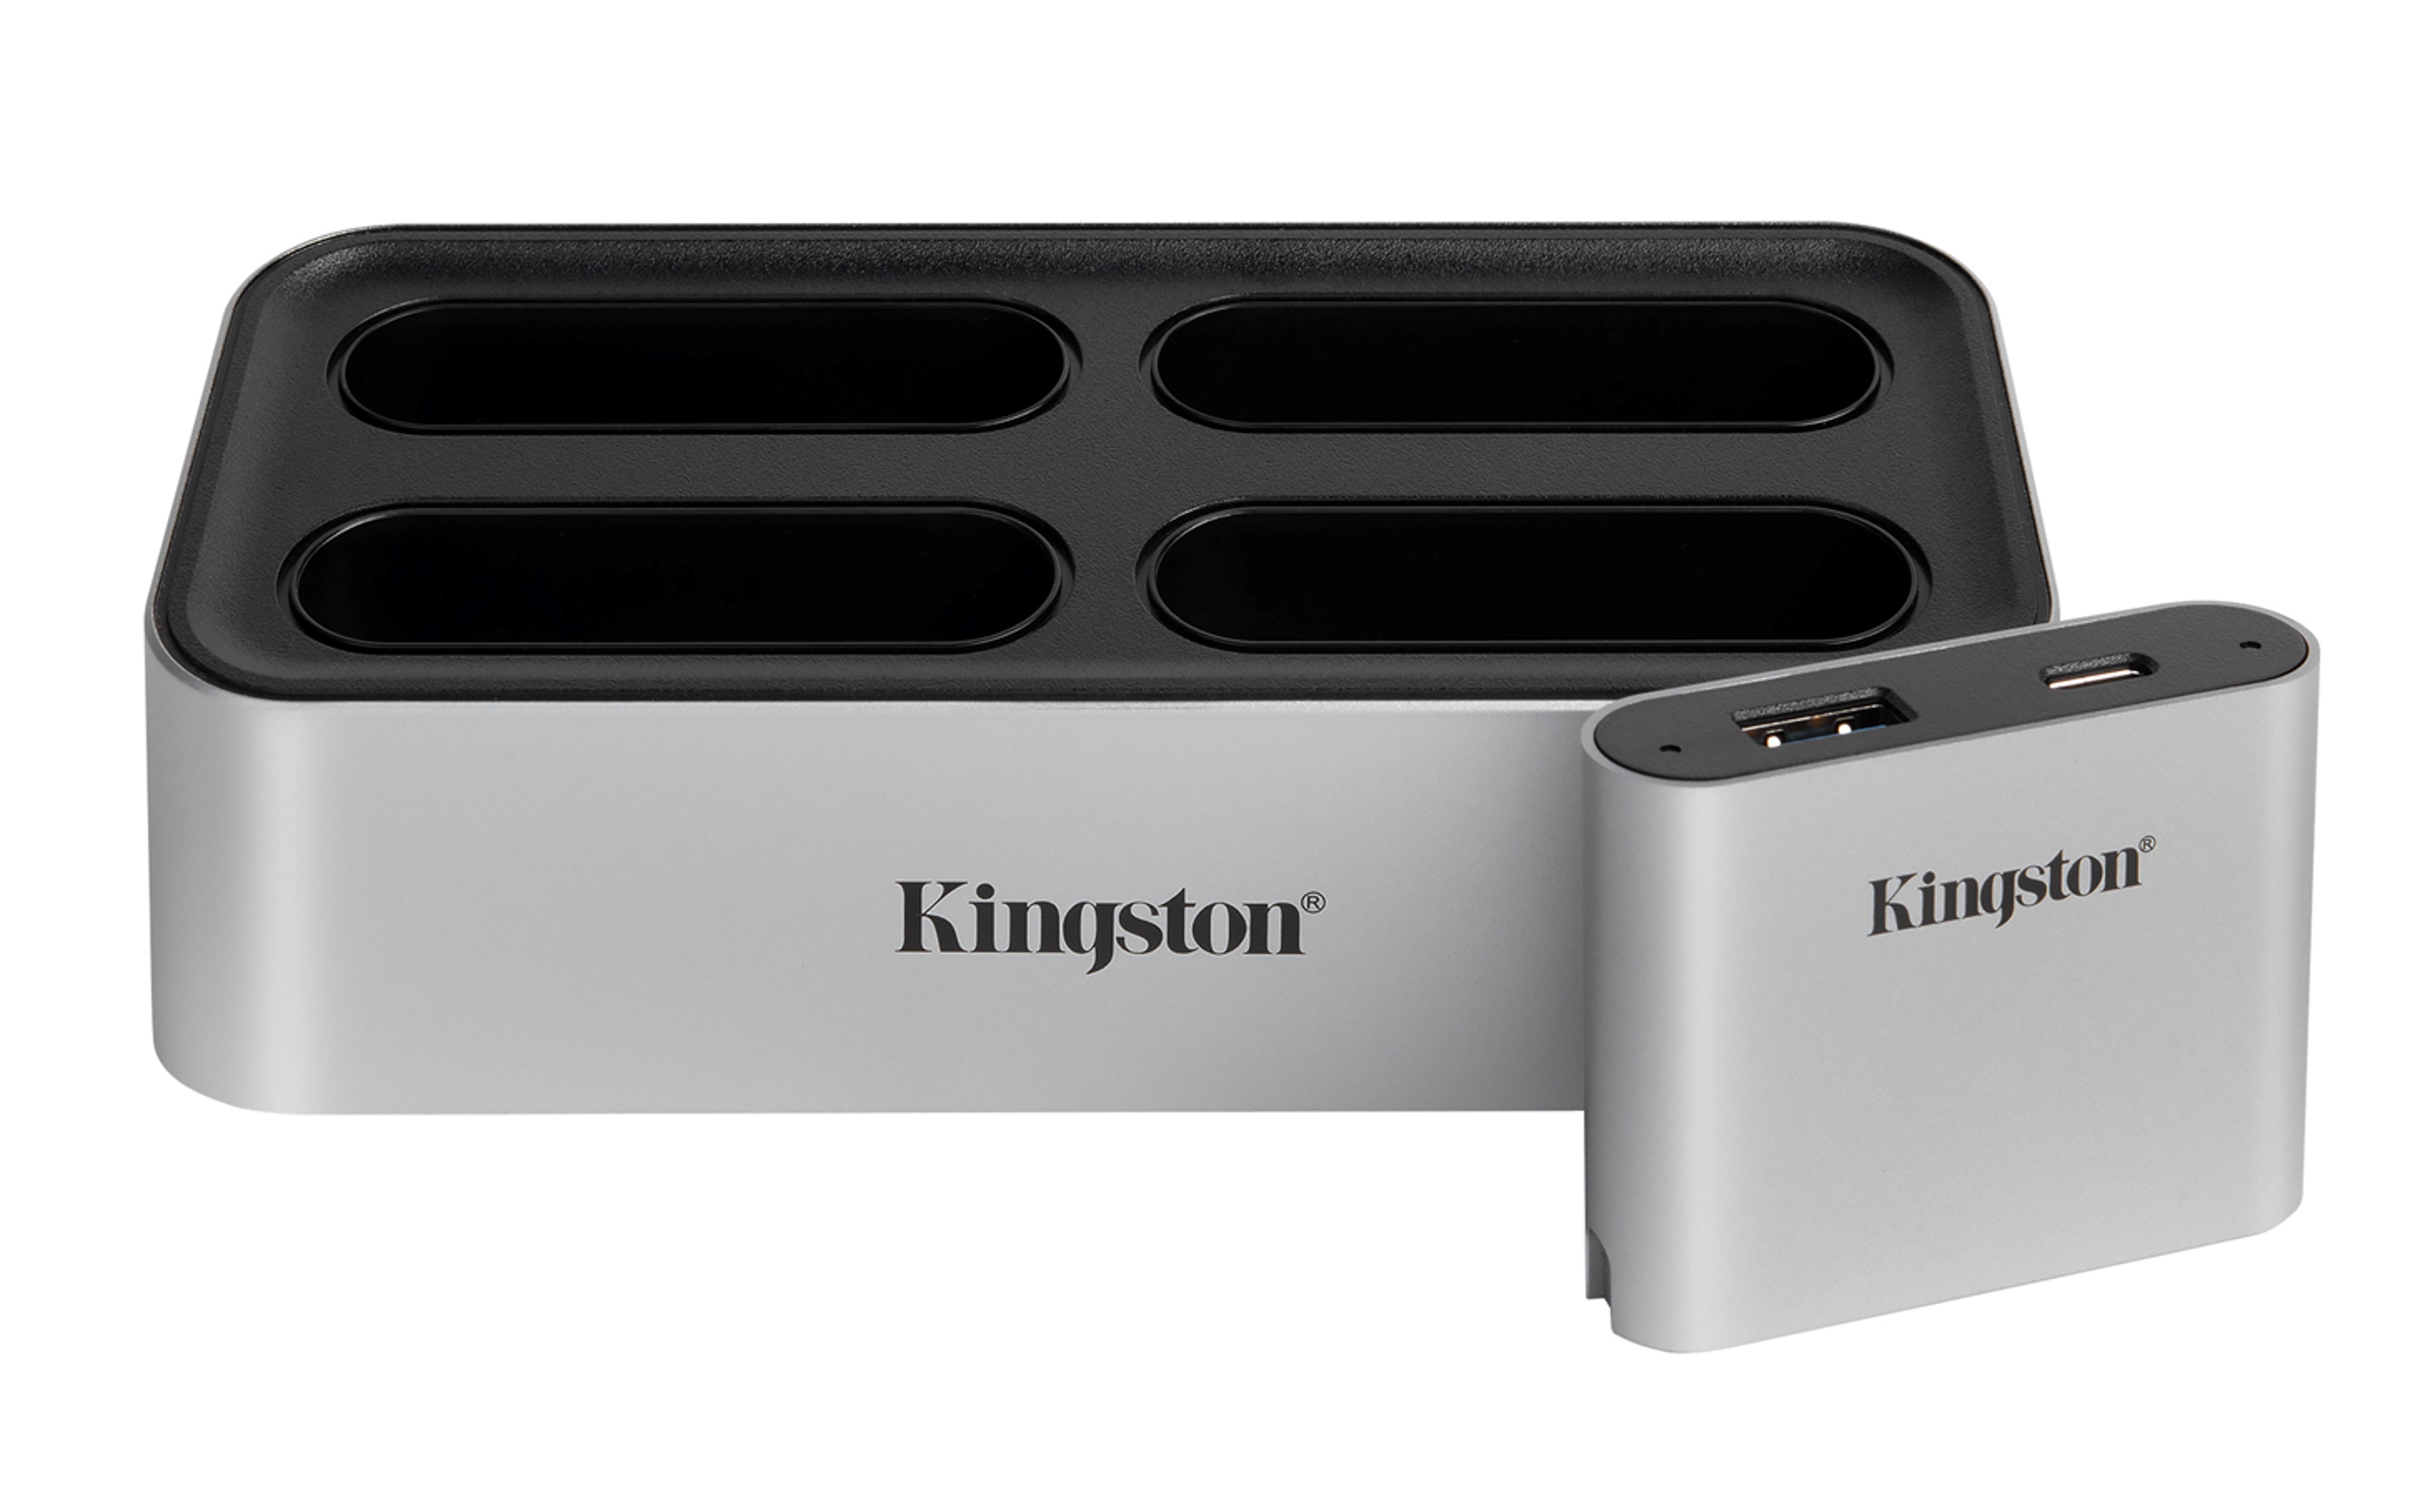 ces workflow station Kingston ปล่อยตัวอย่างไลน์ผลิตภัณฑ์ SSD NVMe รุ่นใหม่ และเปิดตัว Kingston Workflow Station พร้อม Readers